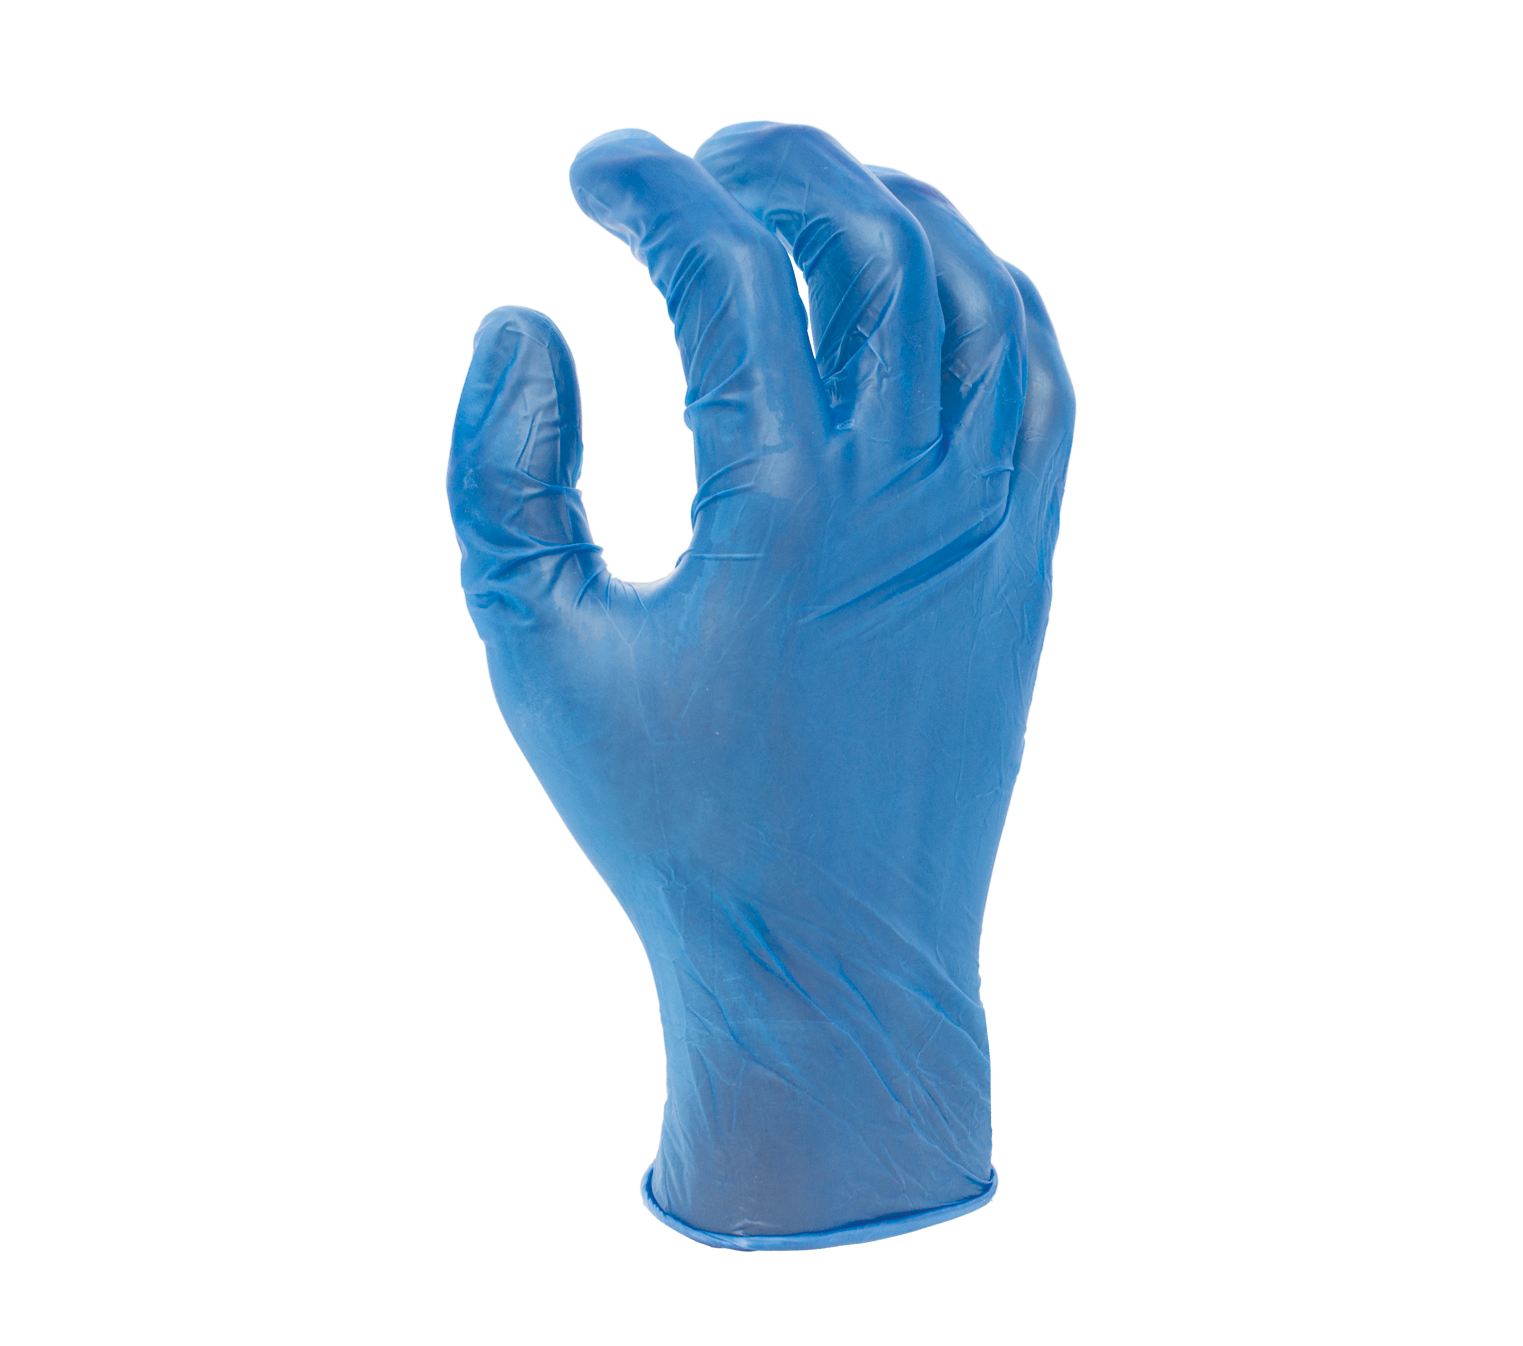 5 mil Blue Vinyl Disposable Gloves, 9 1/2" length, Powder-free, Industrial Grade